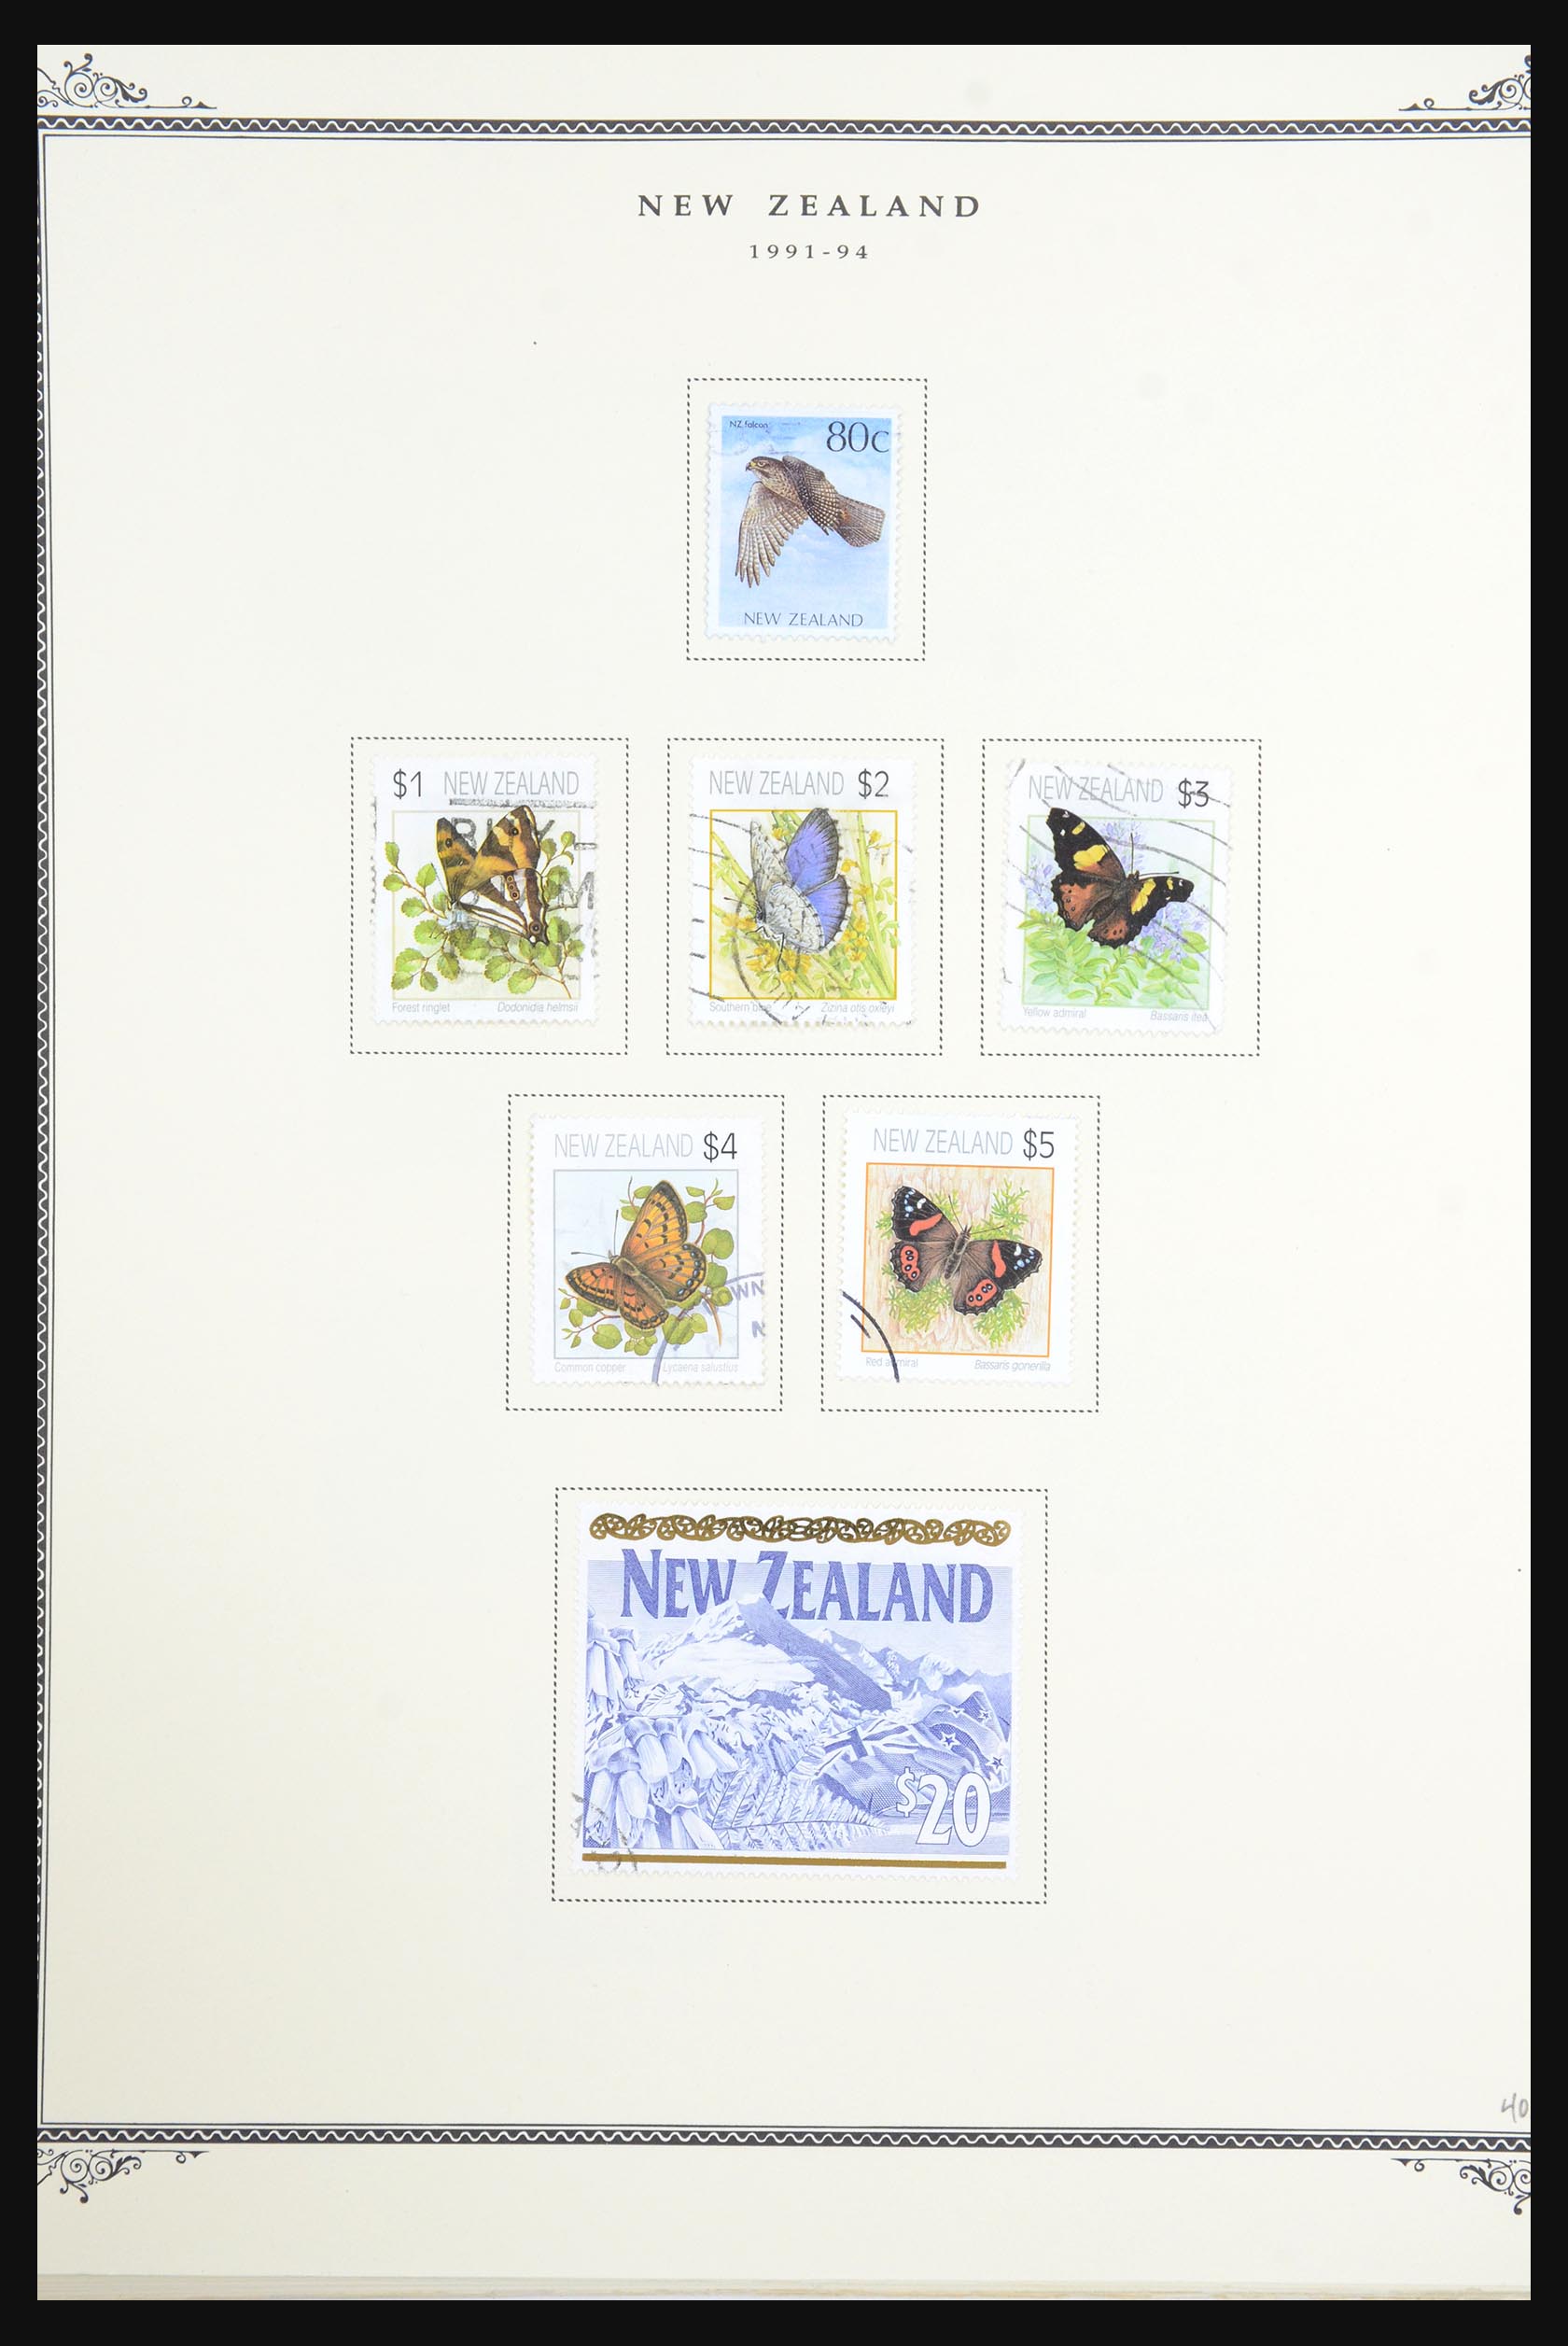 31551 102 - 31551 New Zealand 1855-2000.